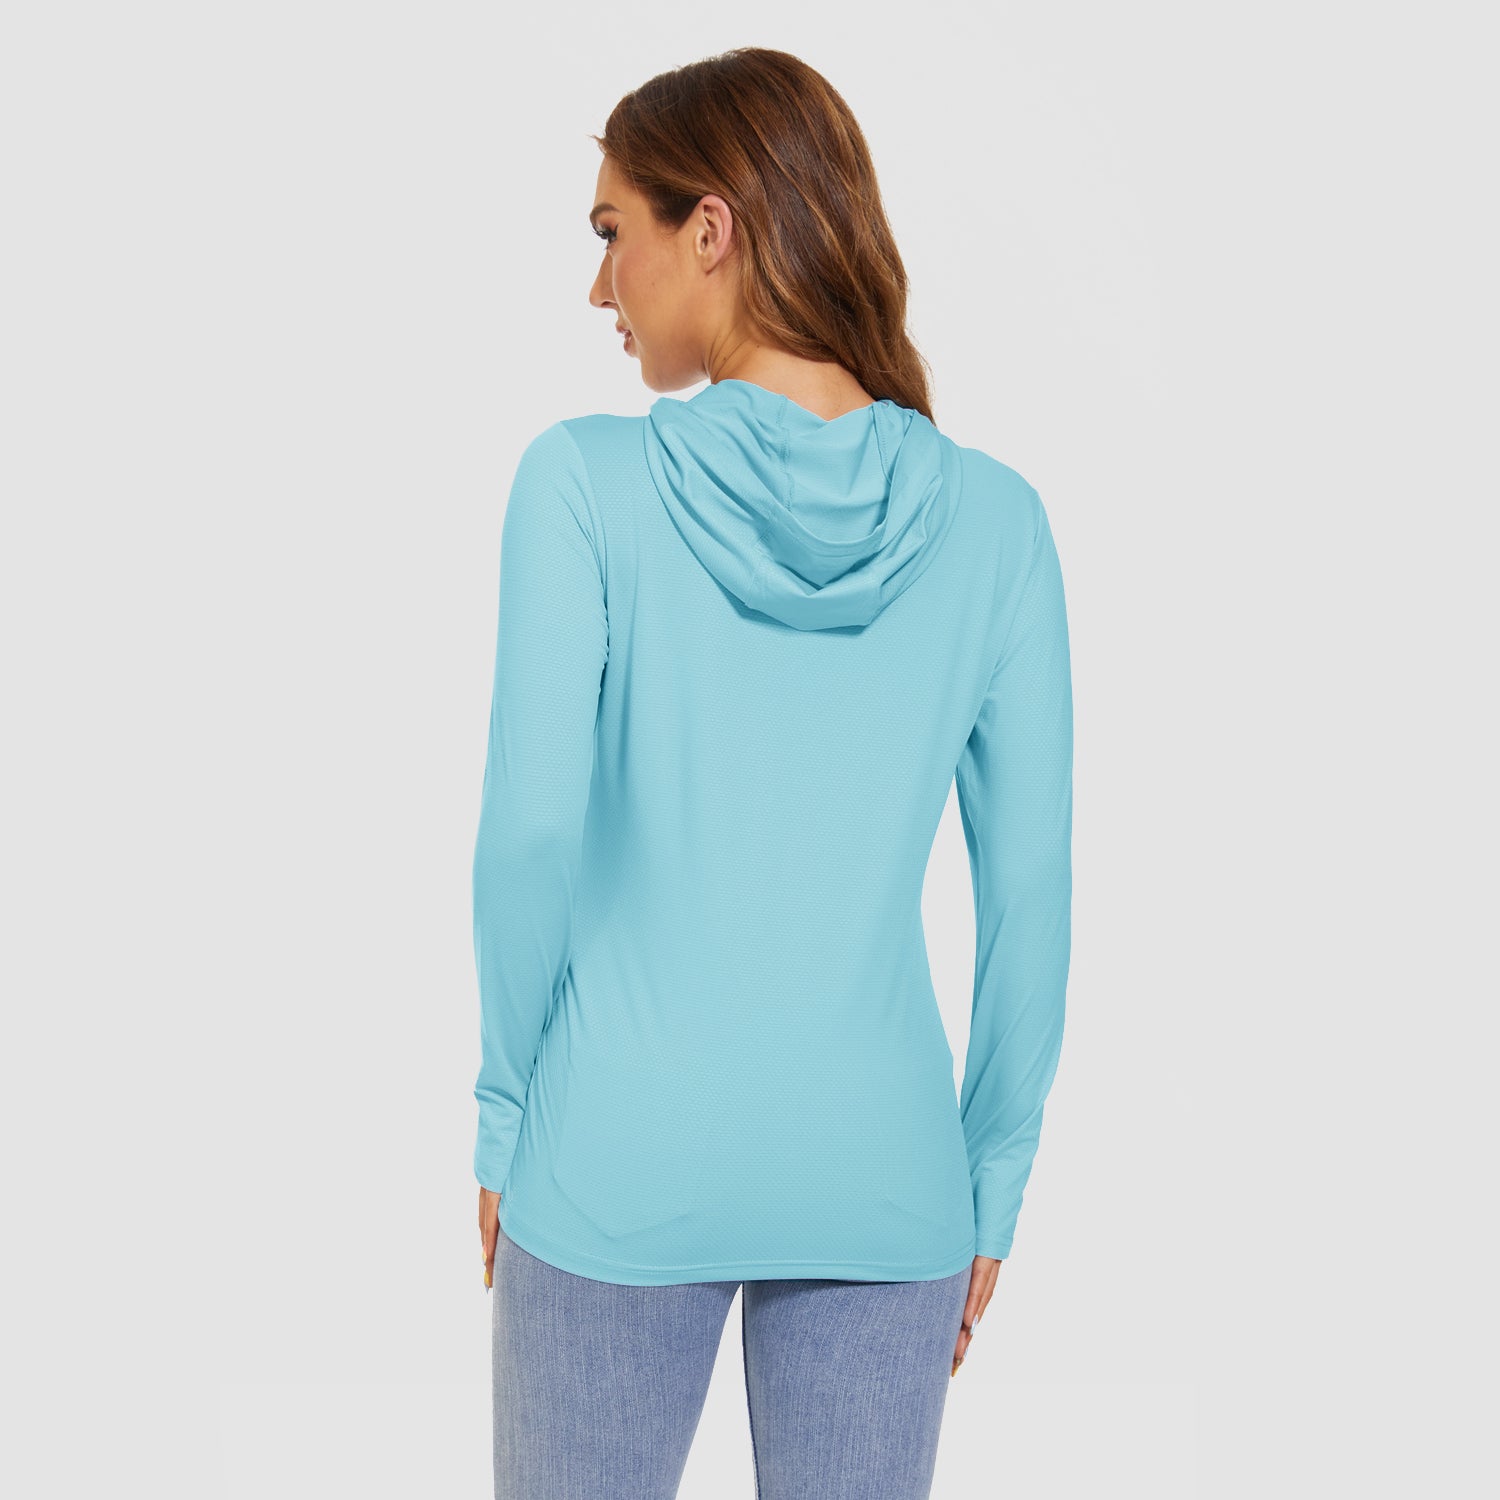 Women's Hoodie Shirts UPF 50+ Sun Protection Long Sleeve UV Shirt Fishing Hiking Athletic Shirts with Thumb Hole, Pale Blue / L